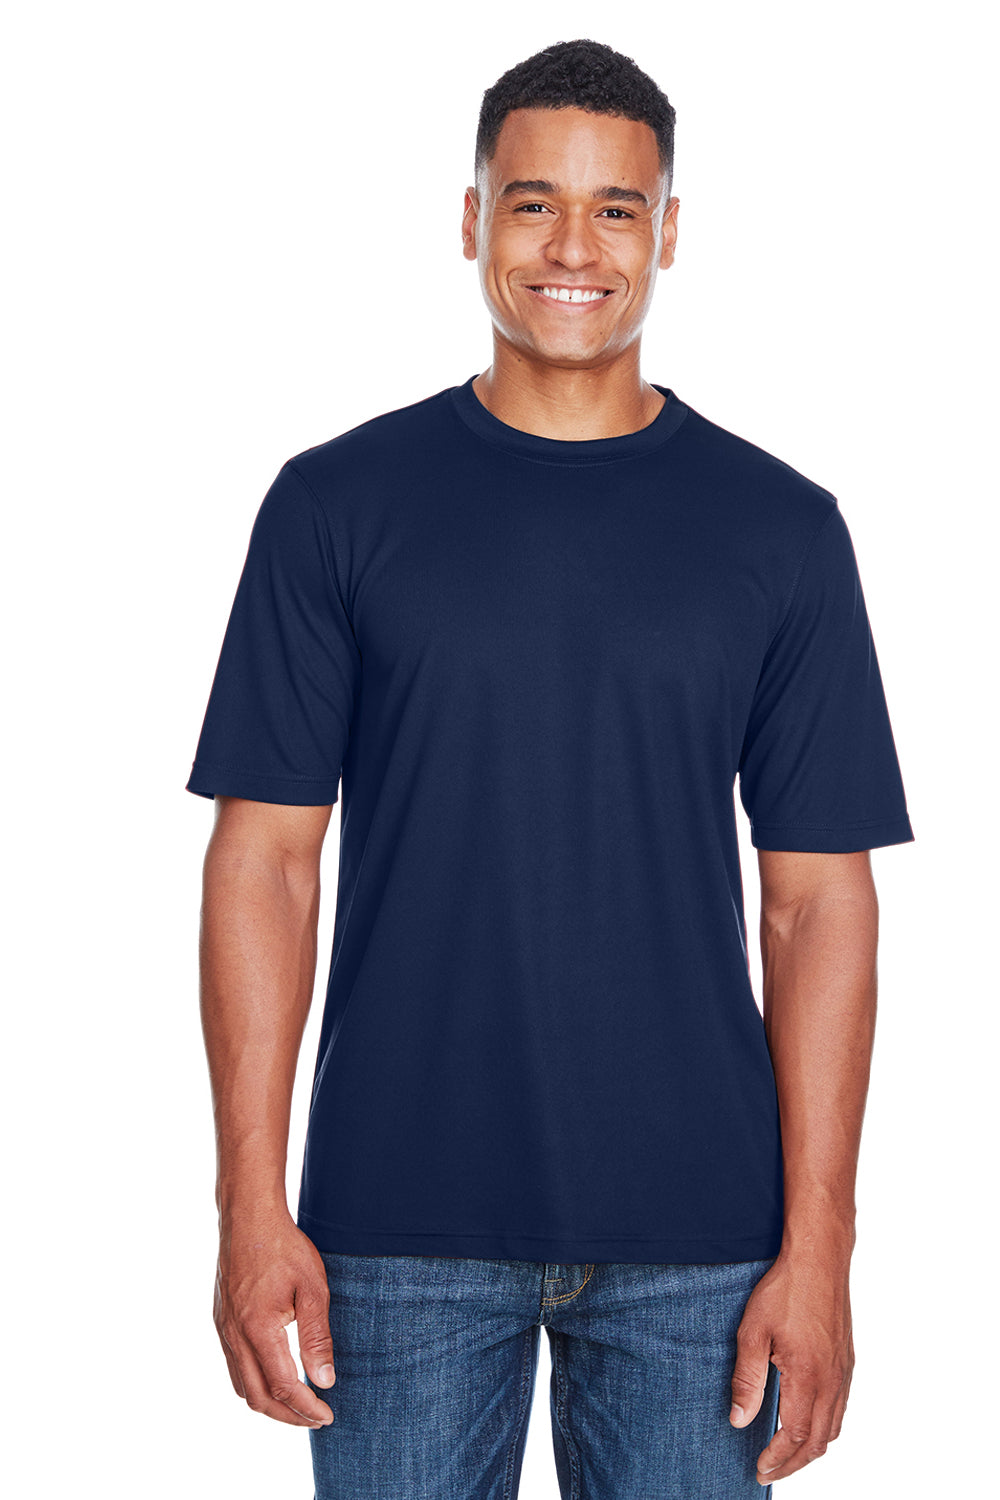 Core 365 88182 Mens Pace Performance Moisture Wicking Short Sleeve Crewneck T-Shirt Navy Blue Front